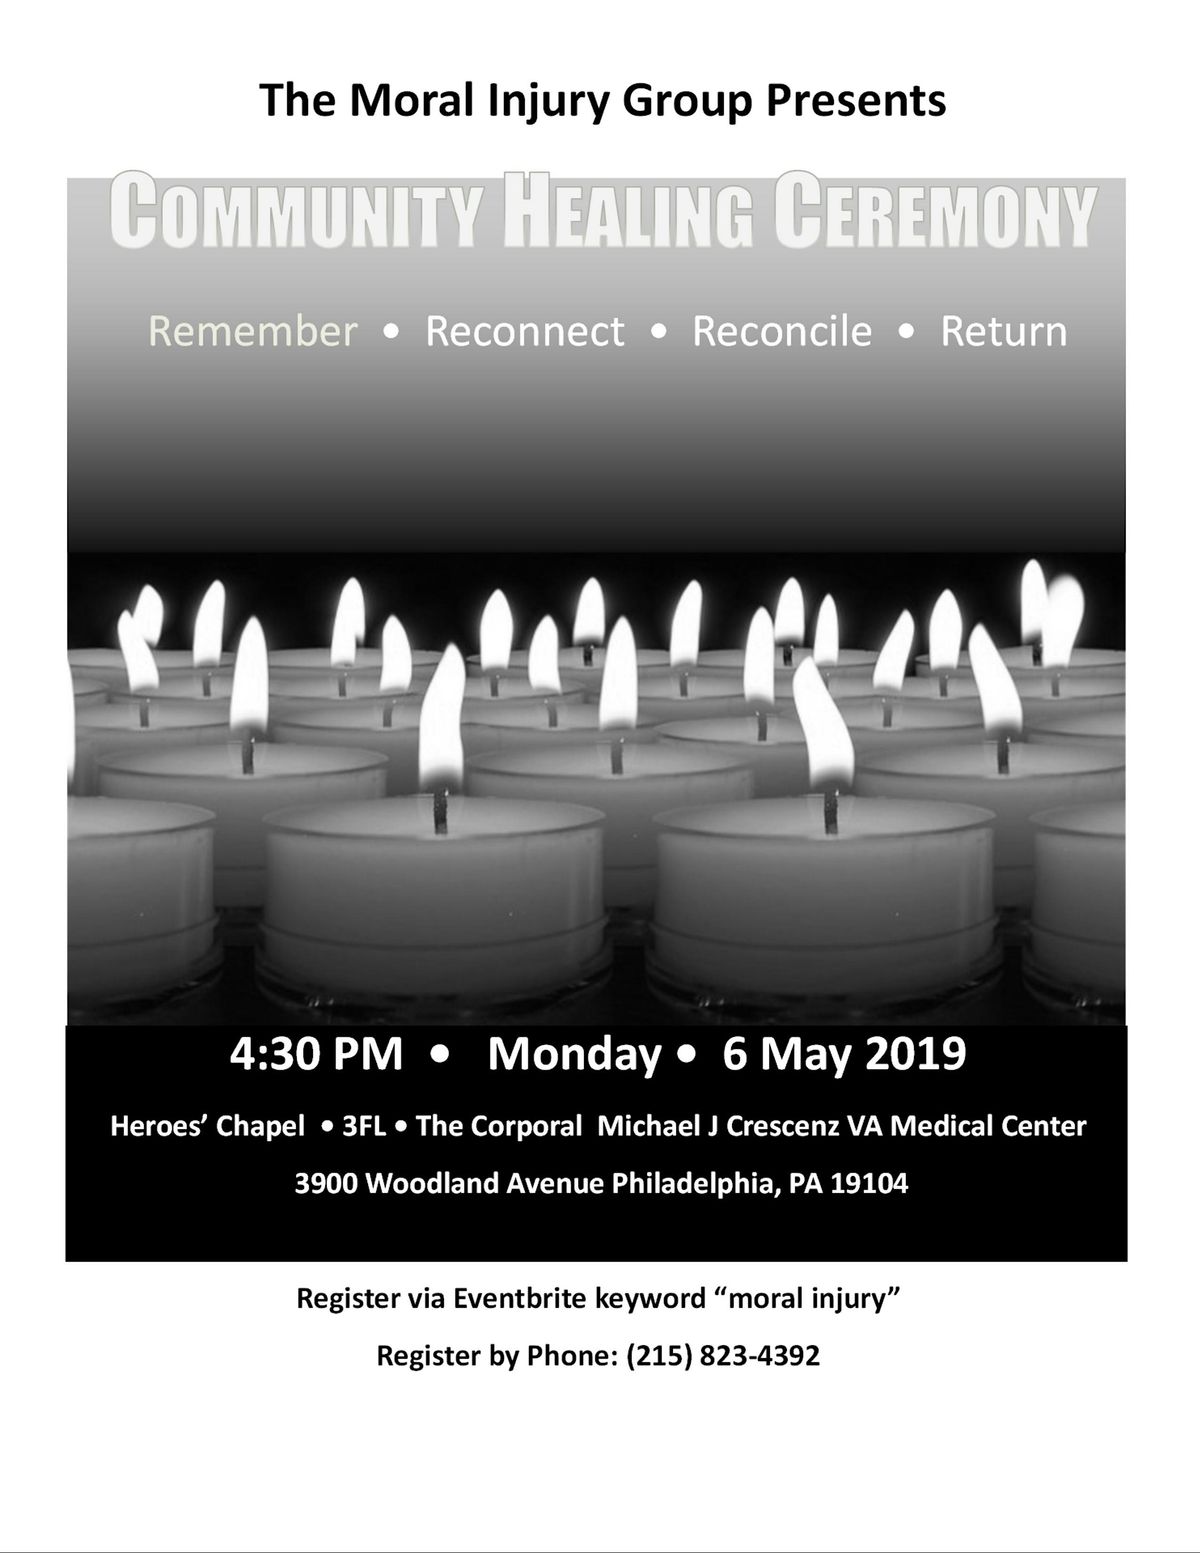 Community Healing Ceremony